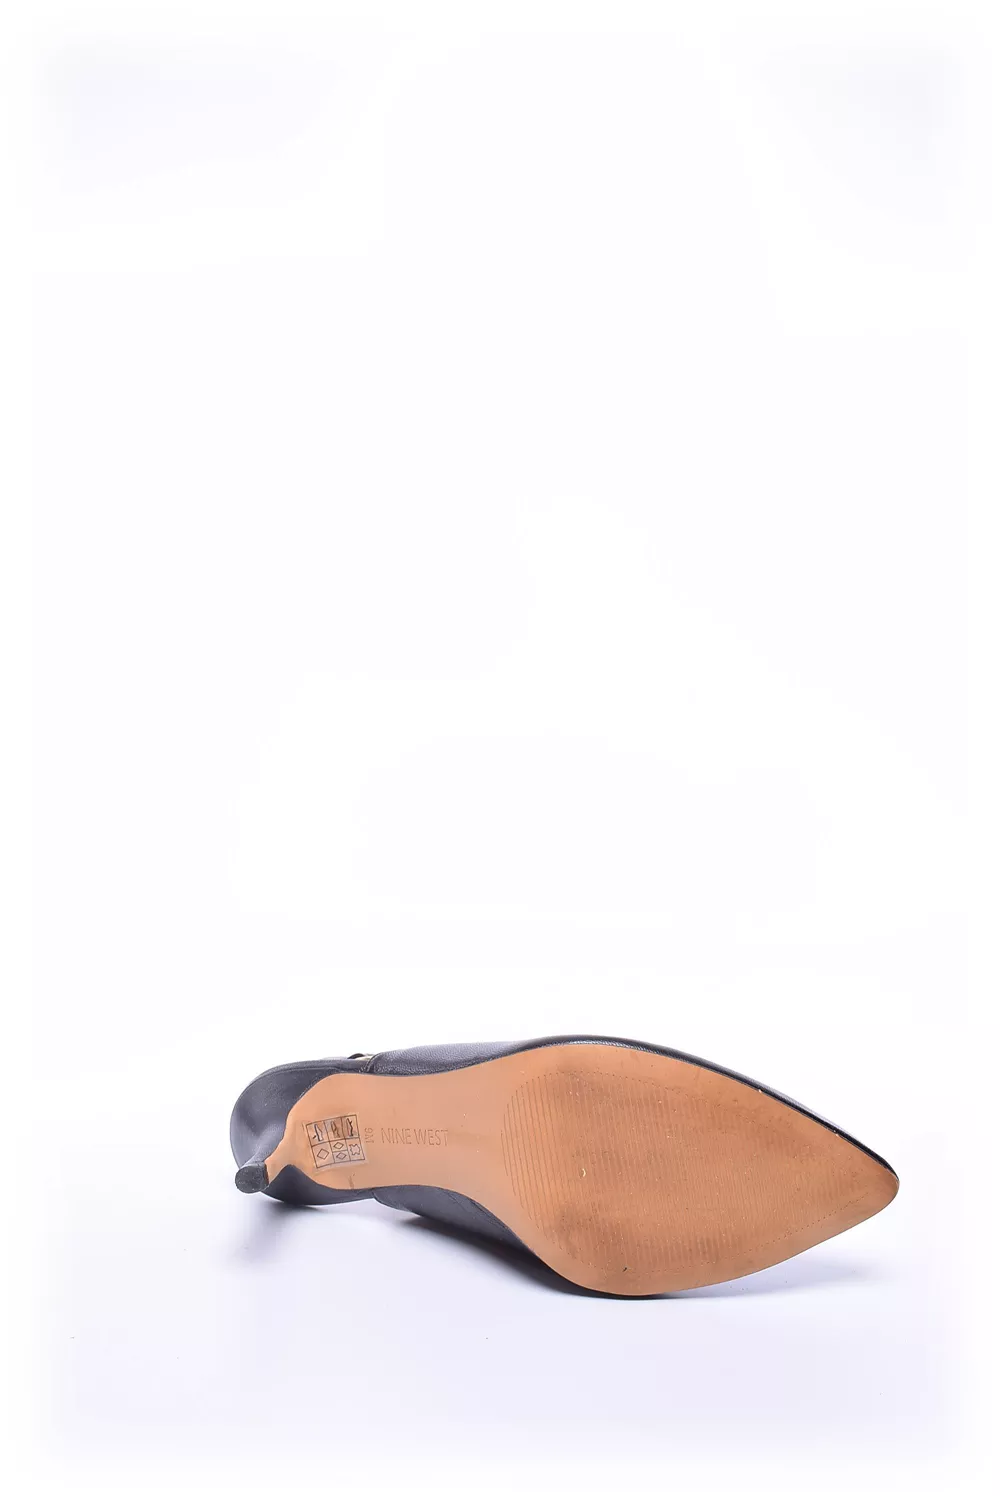 Sandale stiletto dama [1]